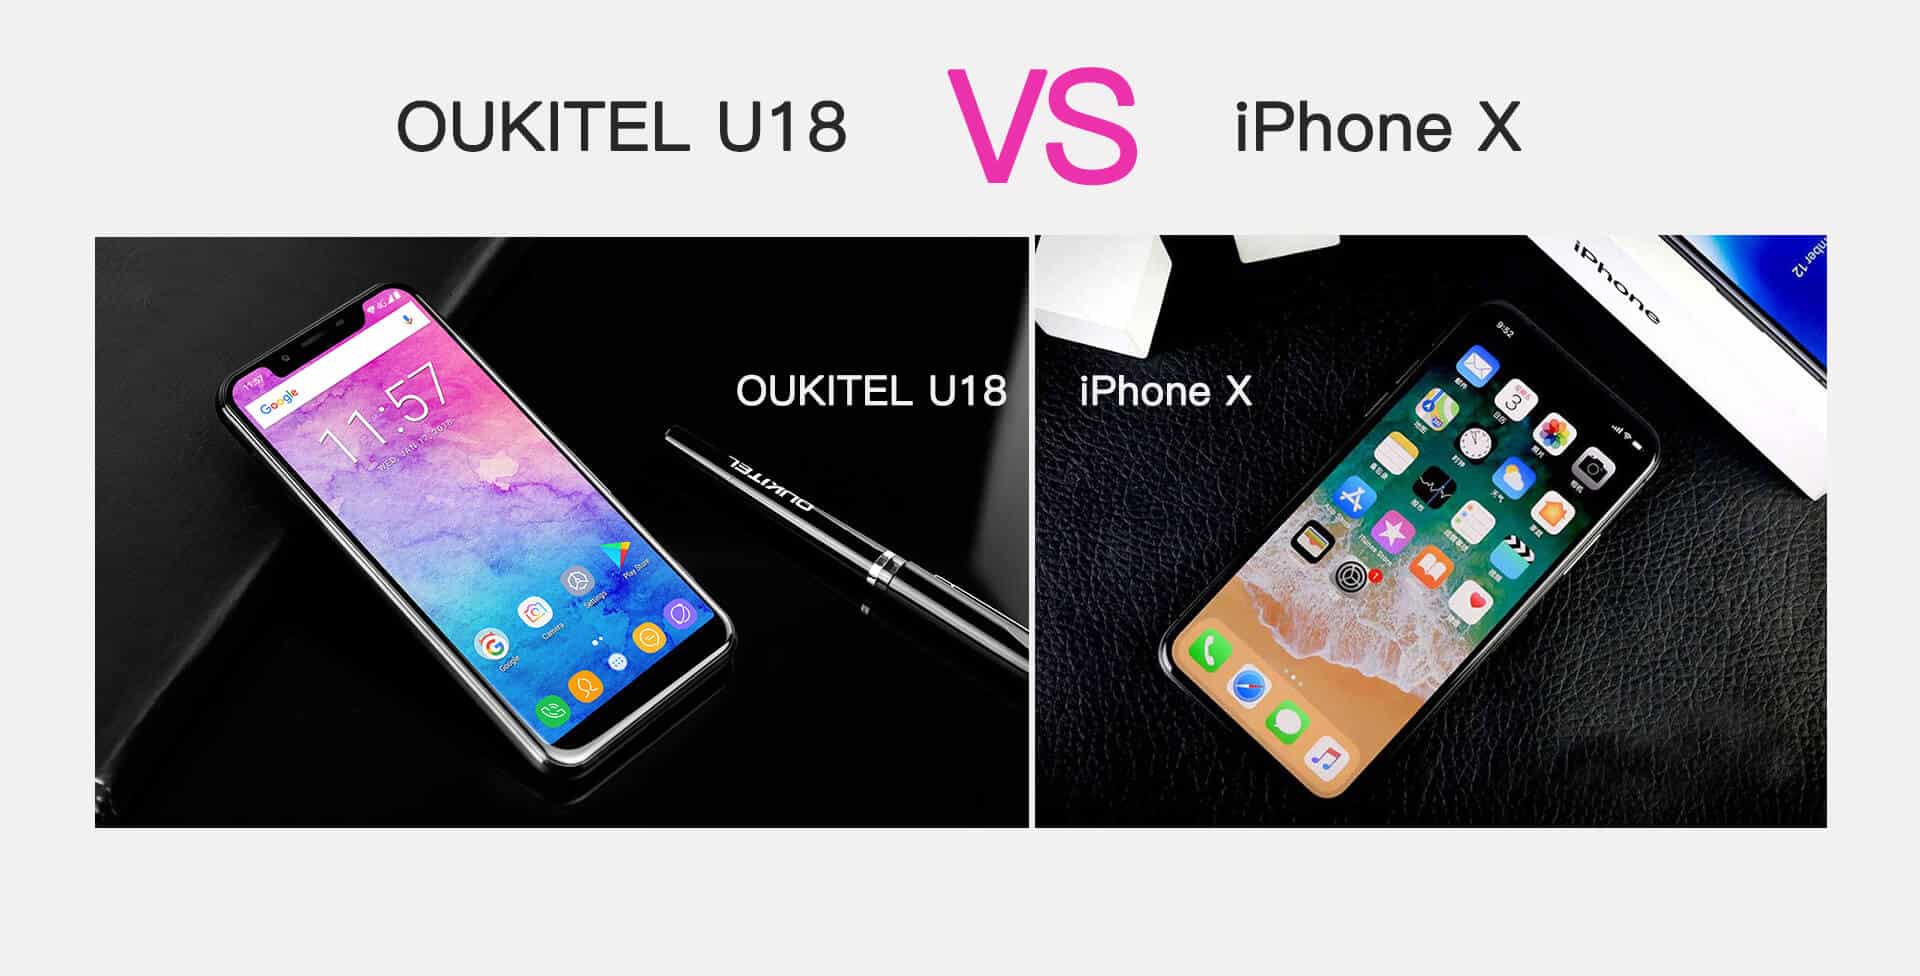 OUKITEL U18 VS iPhone X